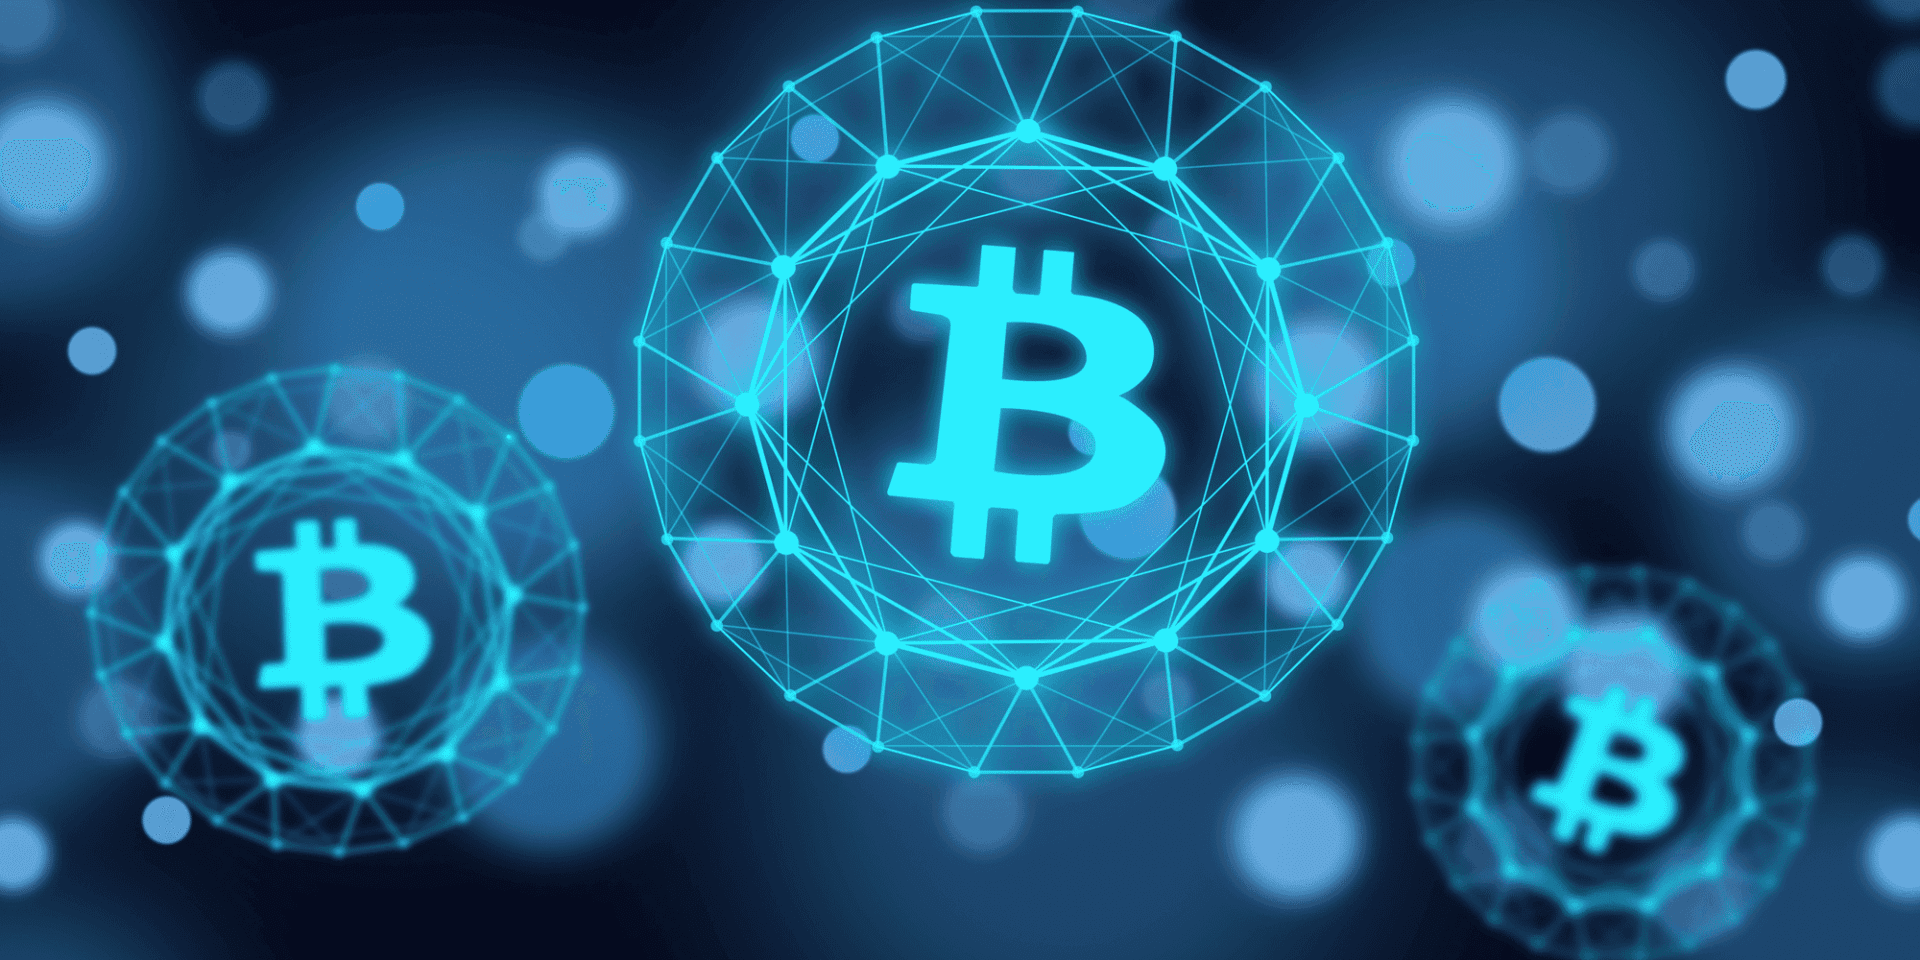 Bitcoin Digital Network Representation